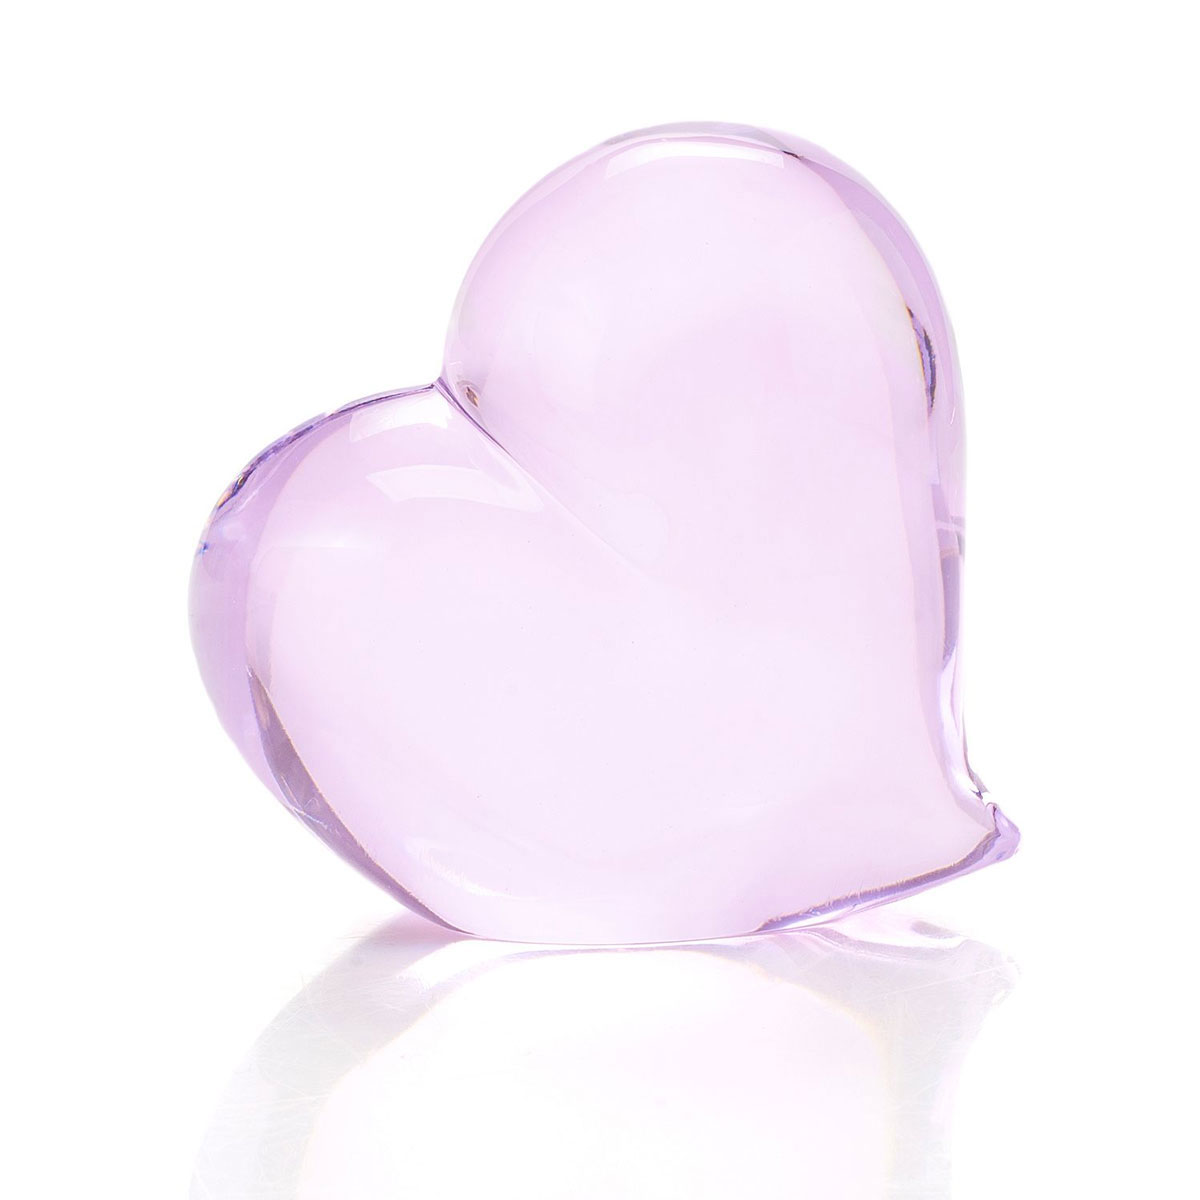 Waterford Crystal 4" Tender Pink Heart Paperweight